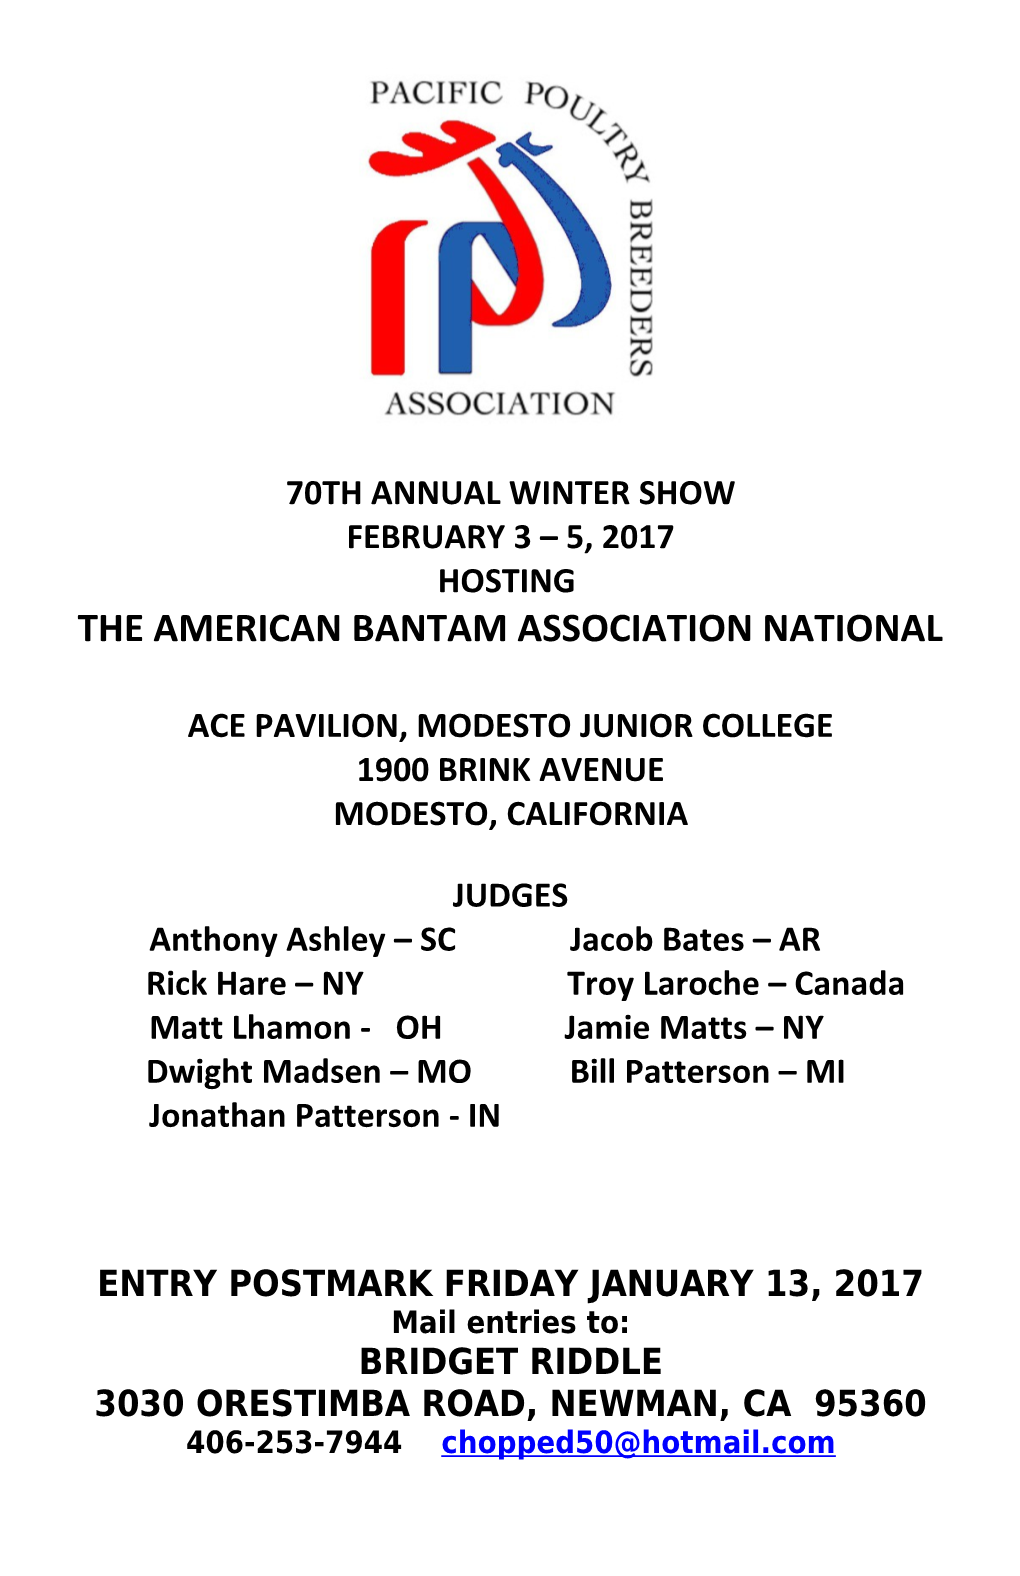 The American Bantam Association National